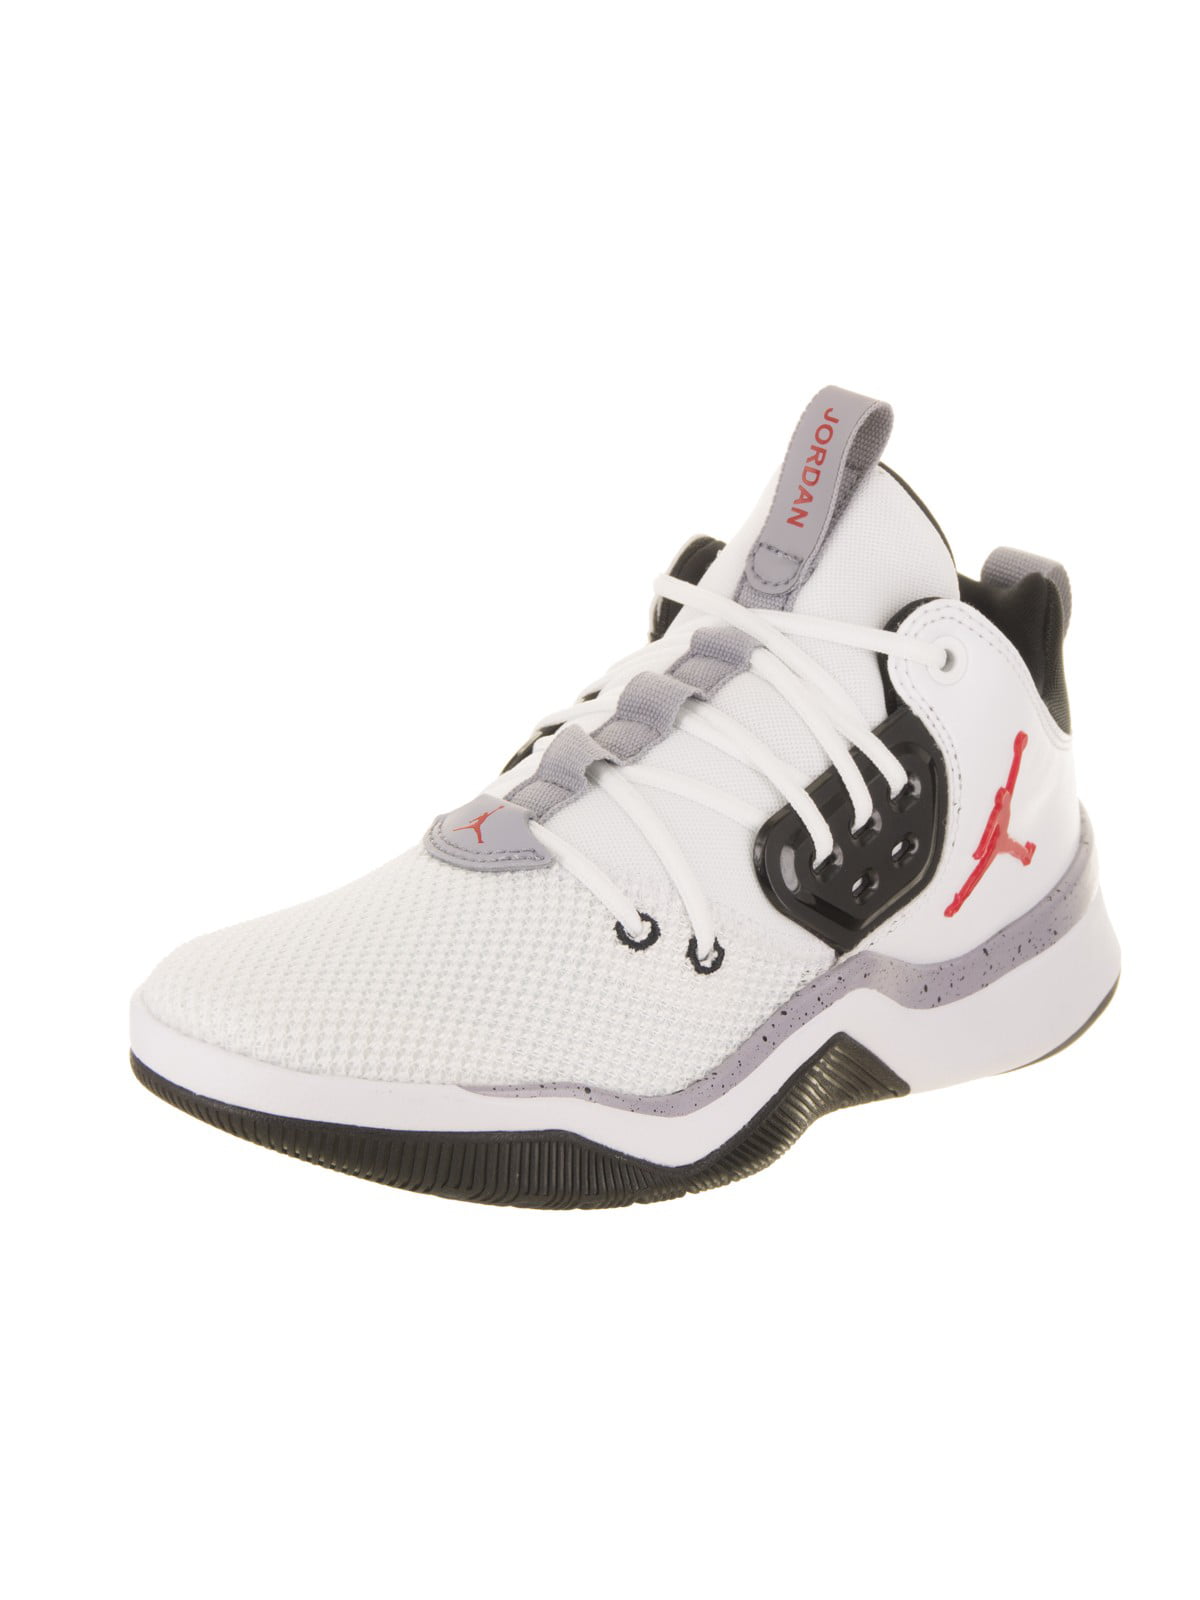 Jordan - Nike Jordan Kids Jordan DNA BG Basketball Shoe - Walmart.com ...